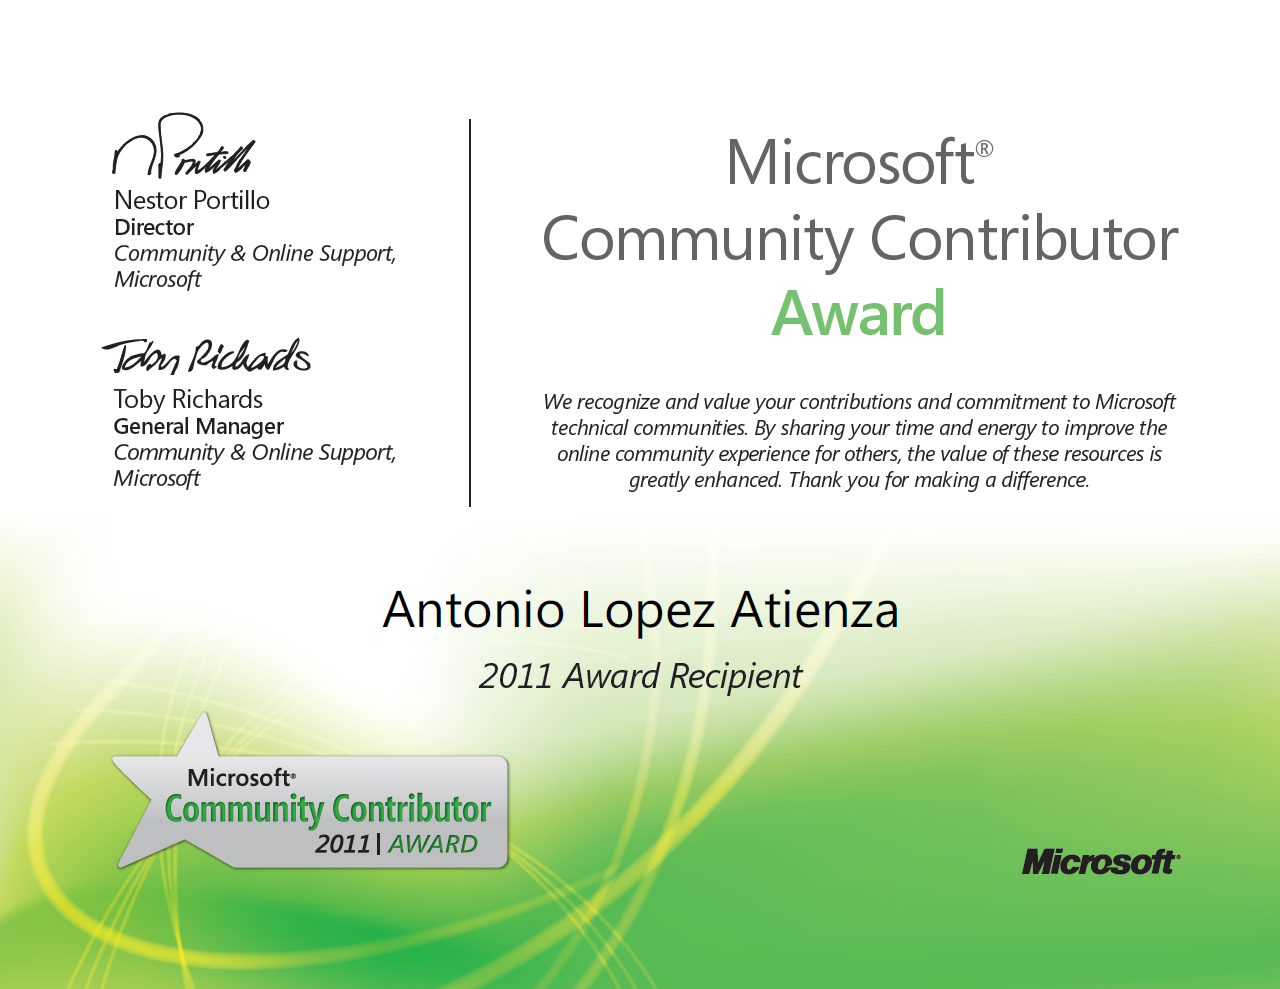 https://www.lopezatienza.com/Imagenes/MCC-Award-Certificate.png